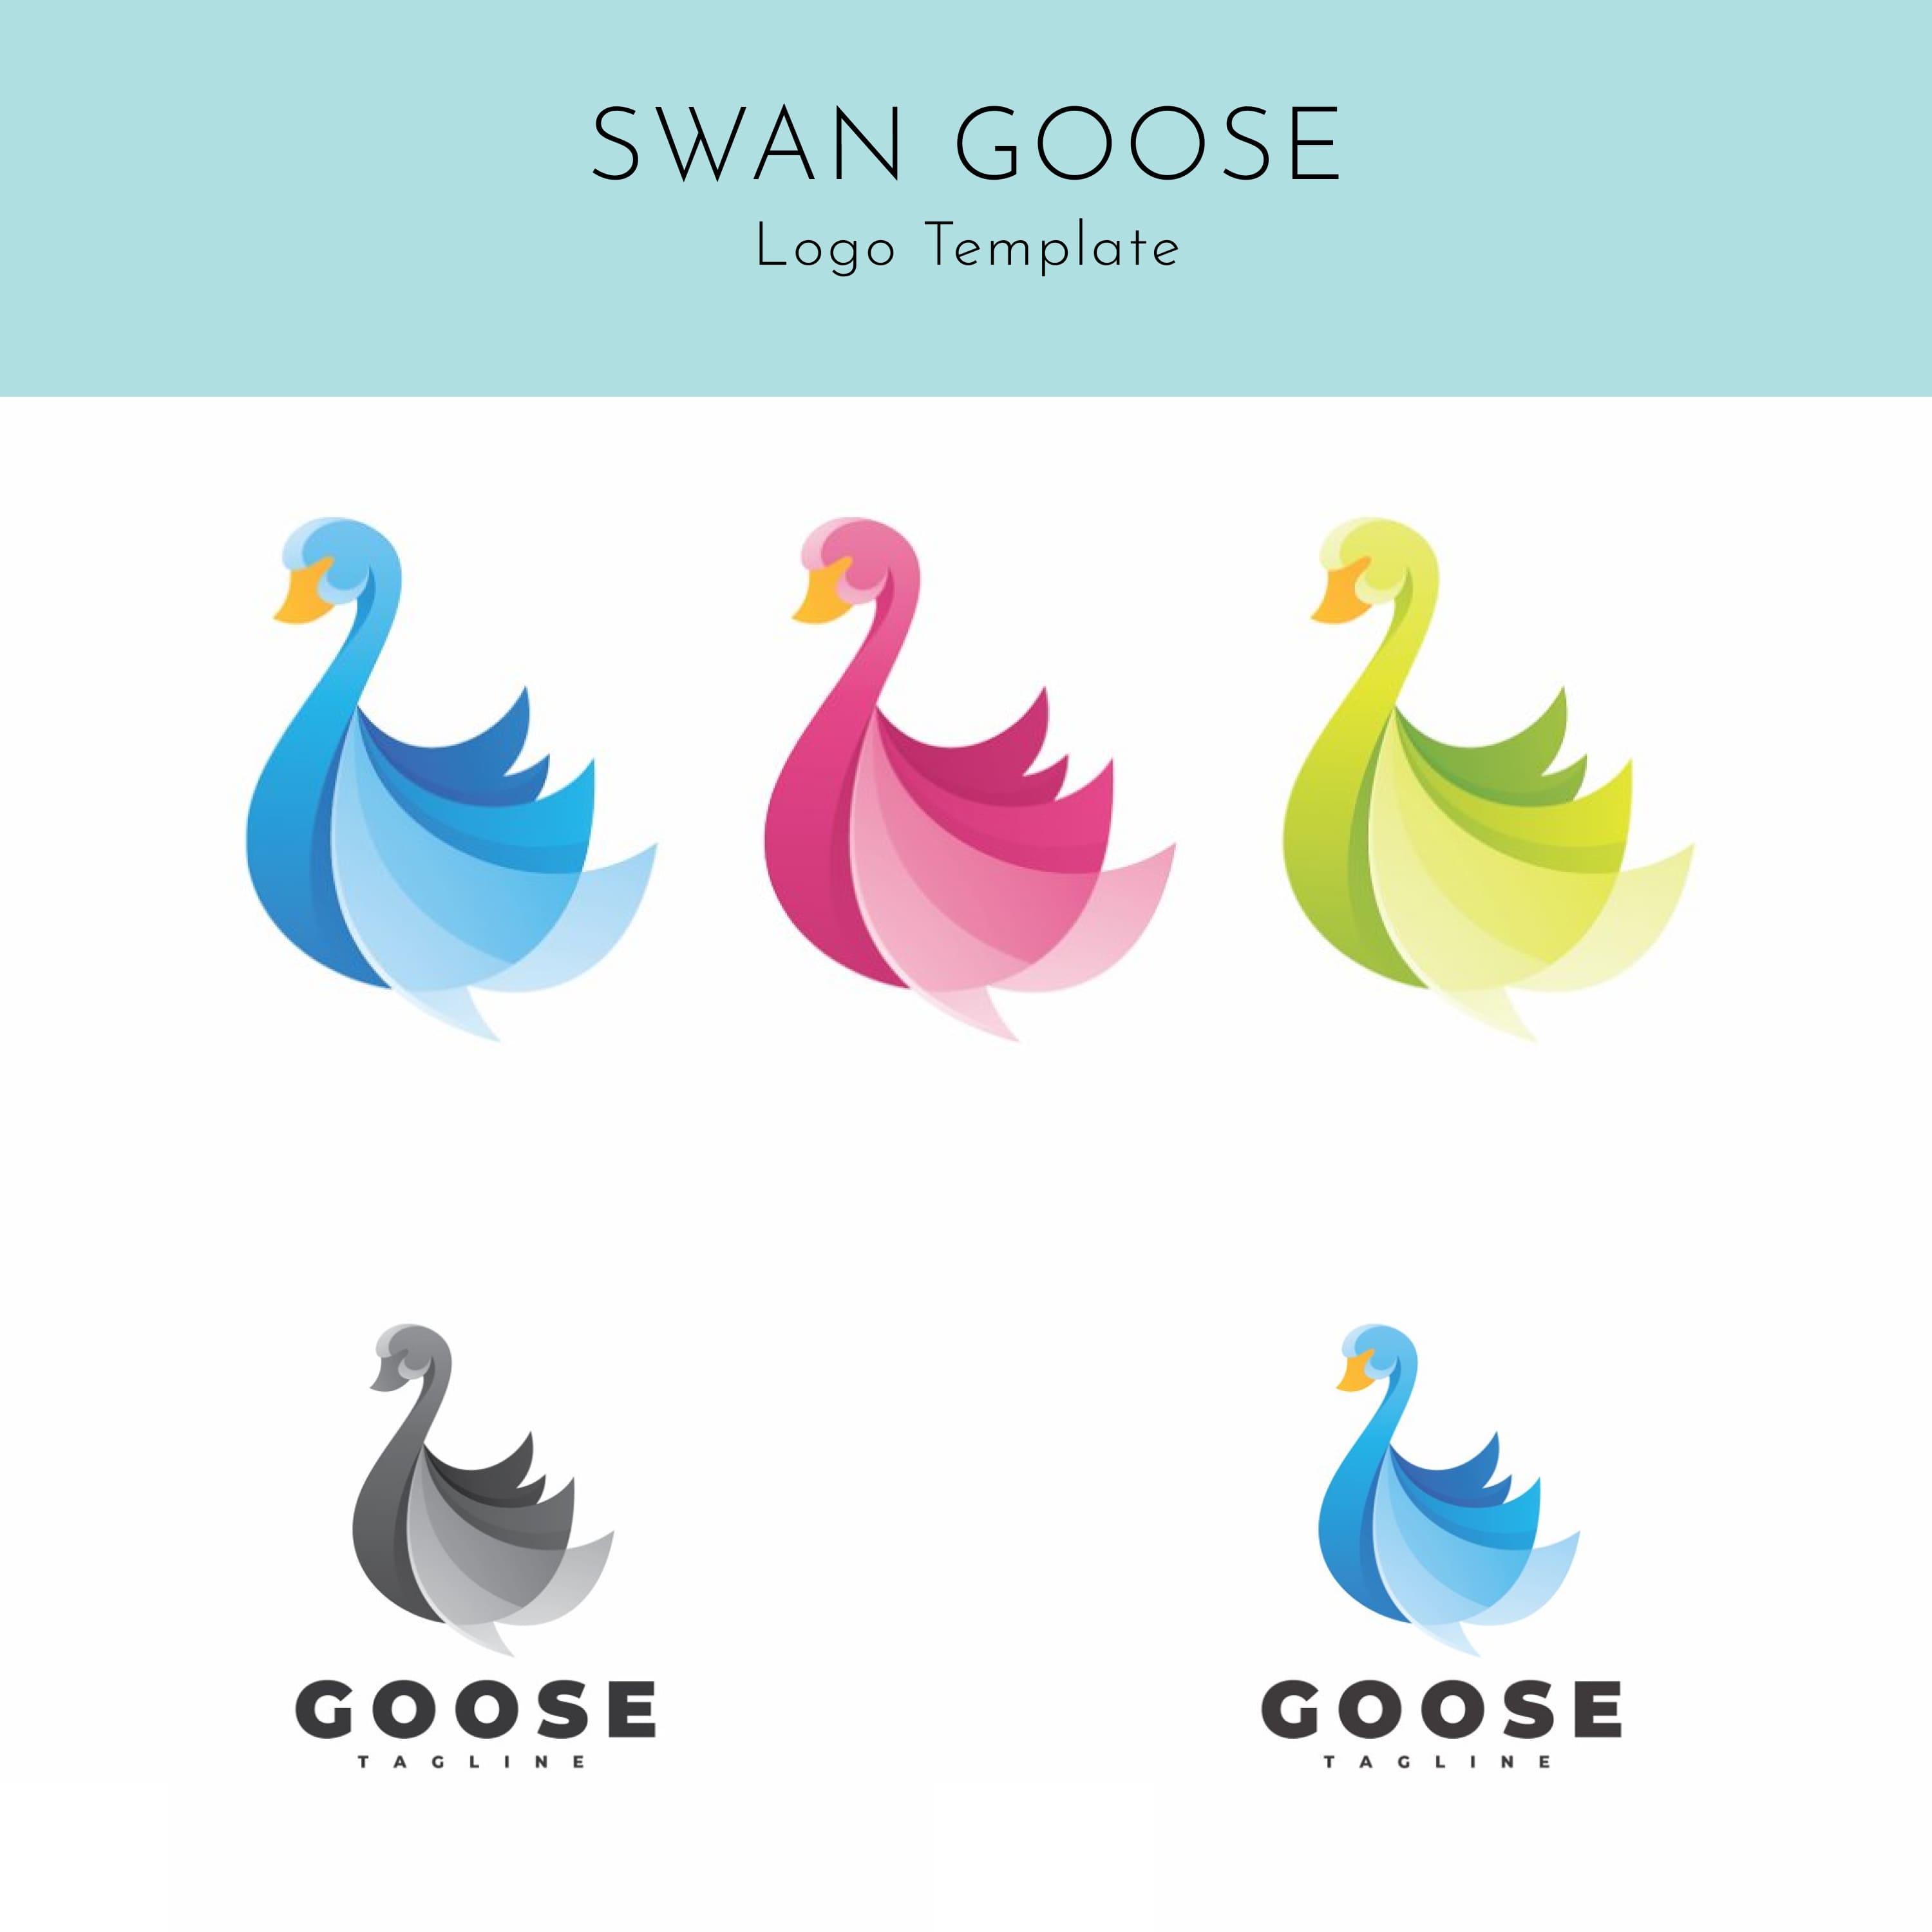 Swan Goose - Logo Template cover.